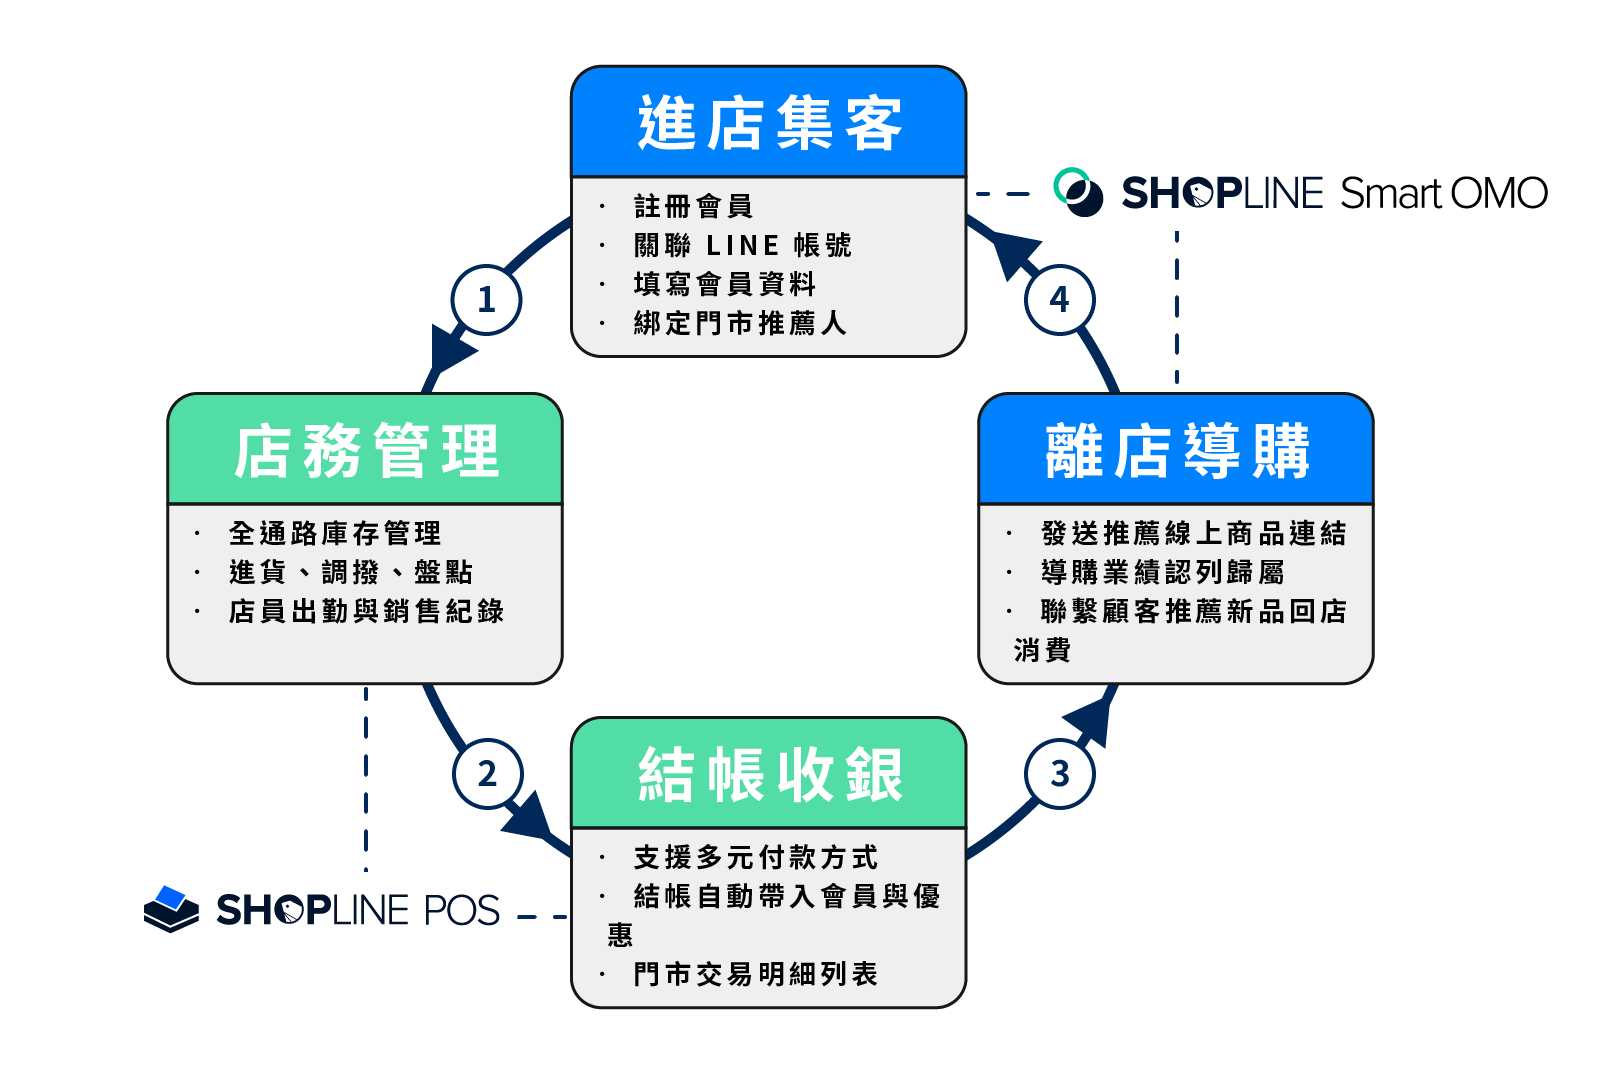 SHOPLINE POS＋Smart OMO 的獲客導購正向循環